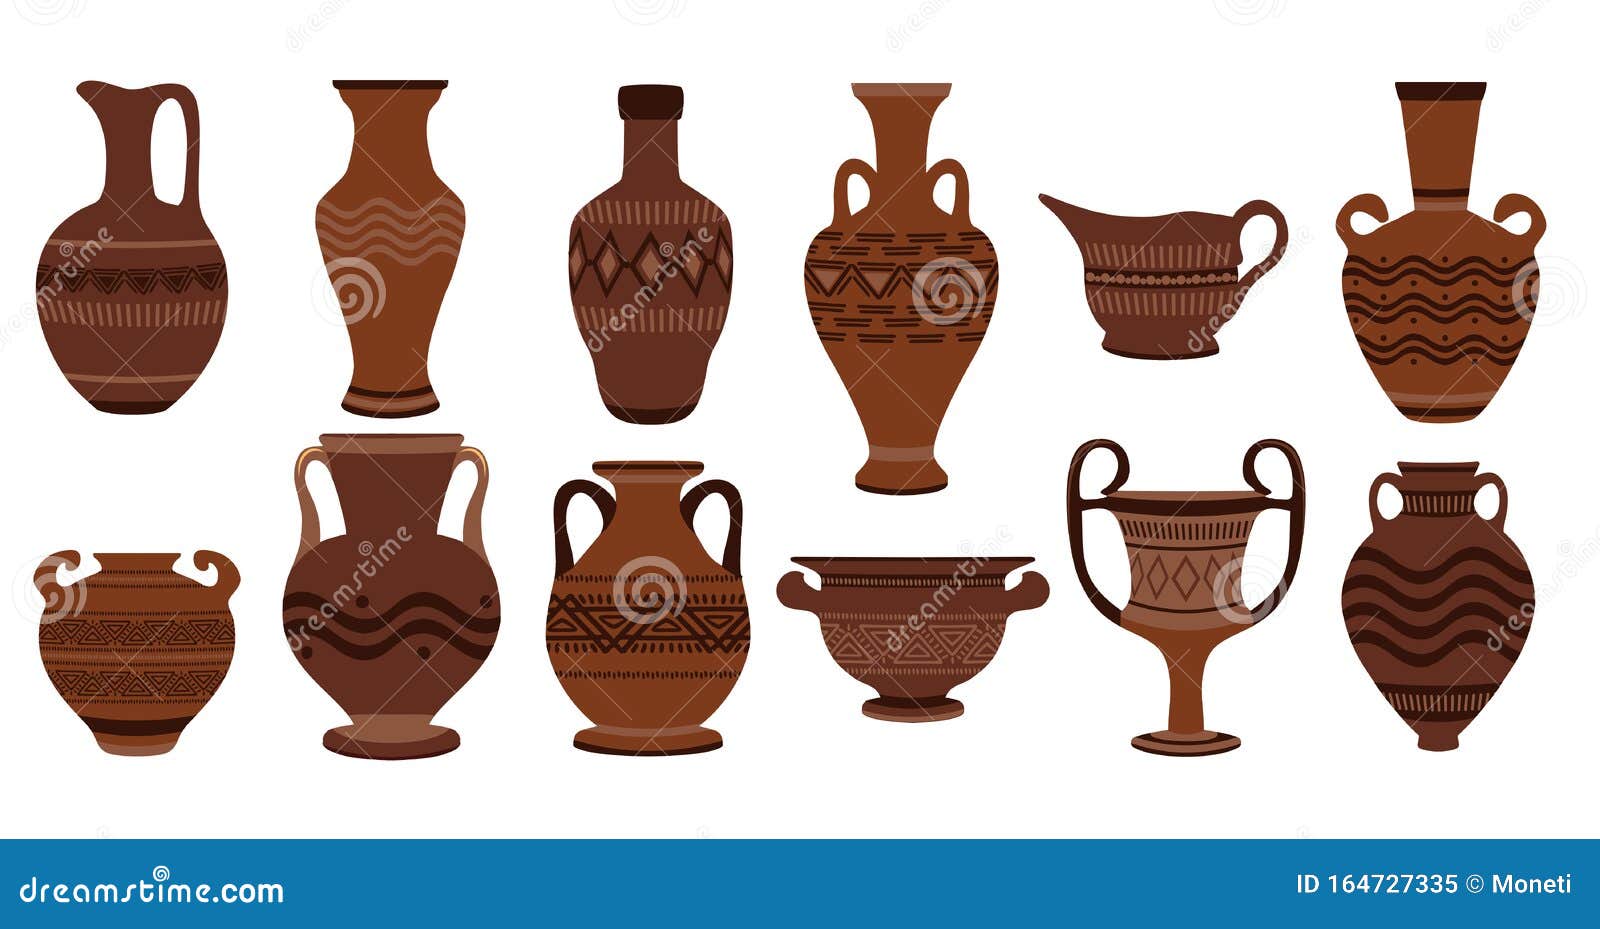 Greek Clay Pots. Illustration of Clay Roman Traditional Vase Stock ...